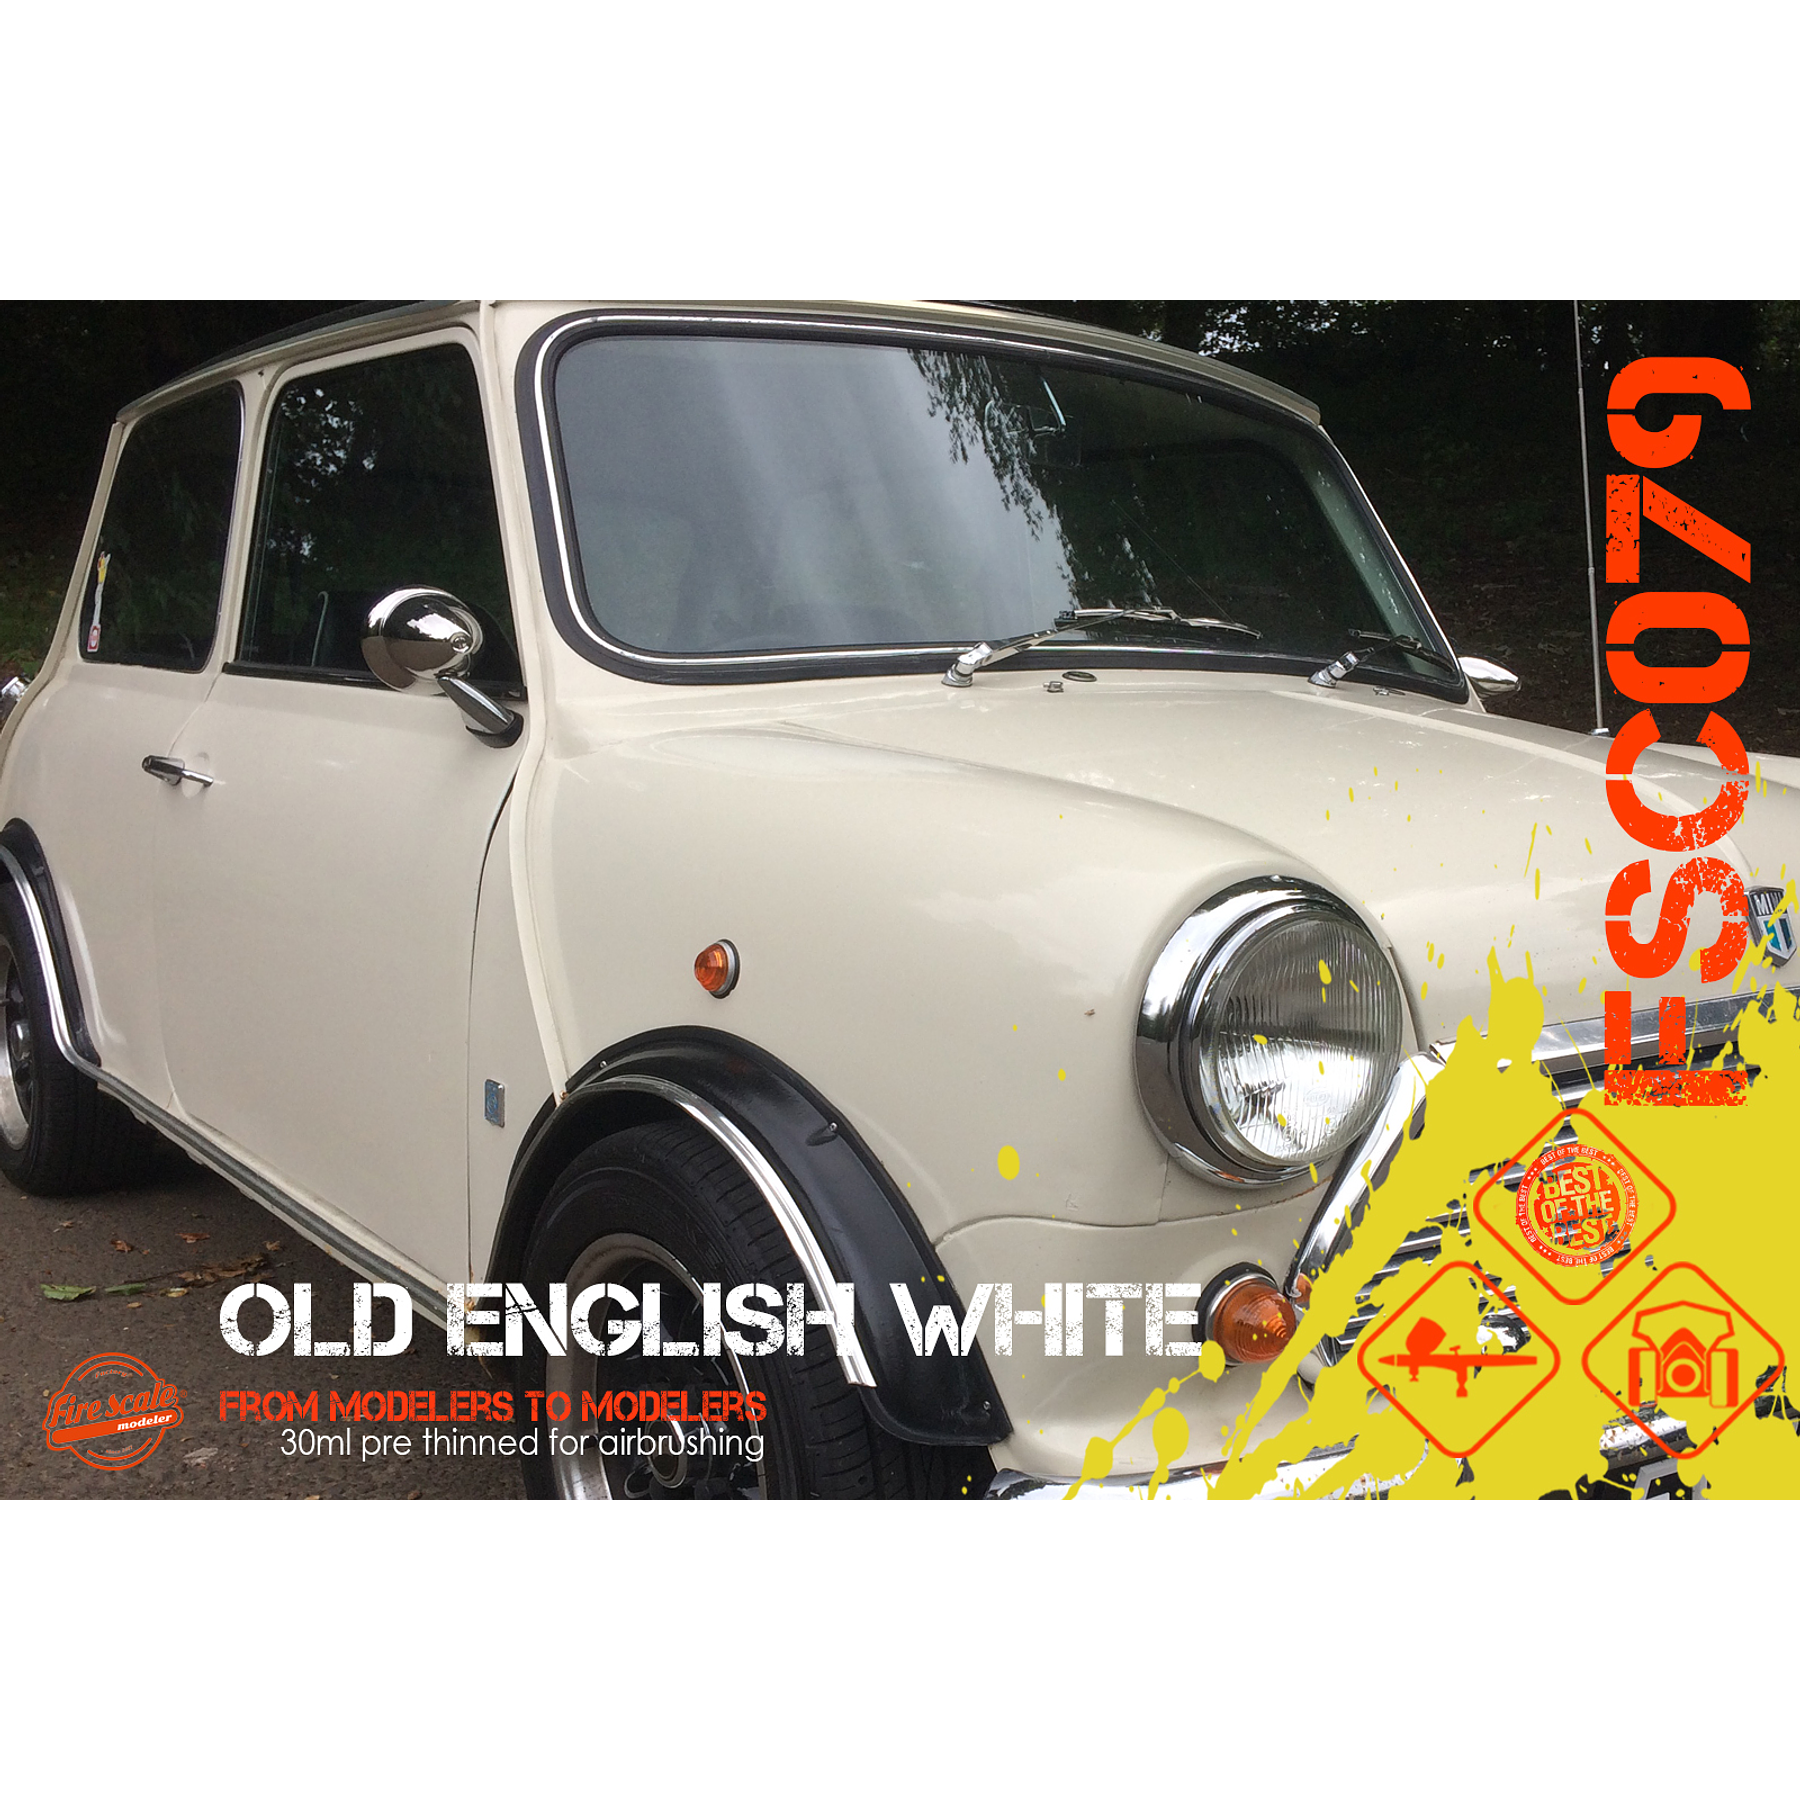 Old English White